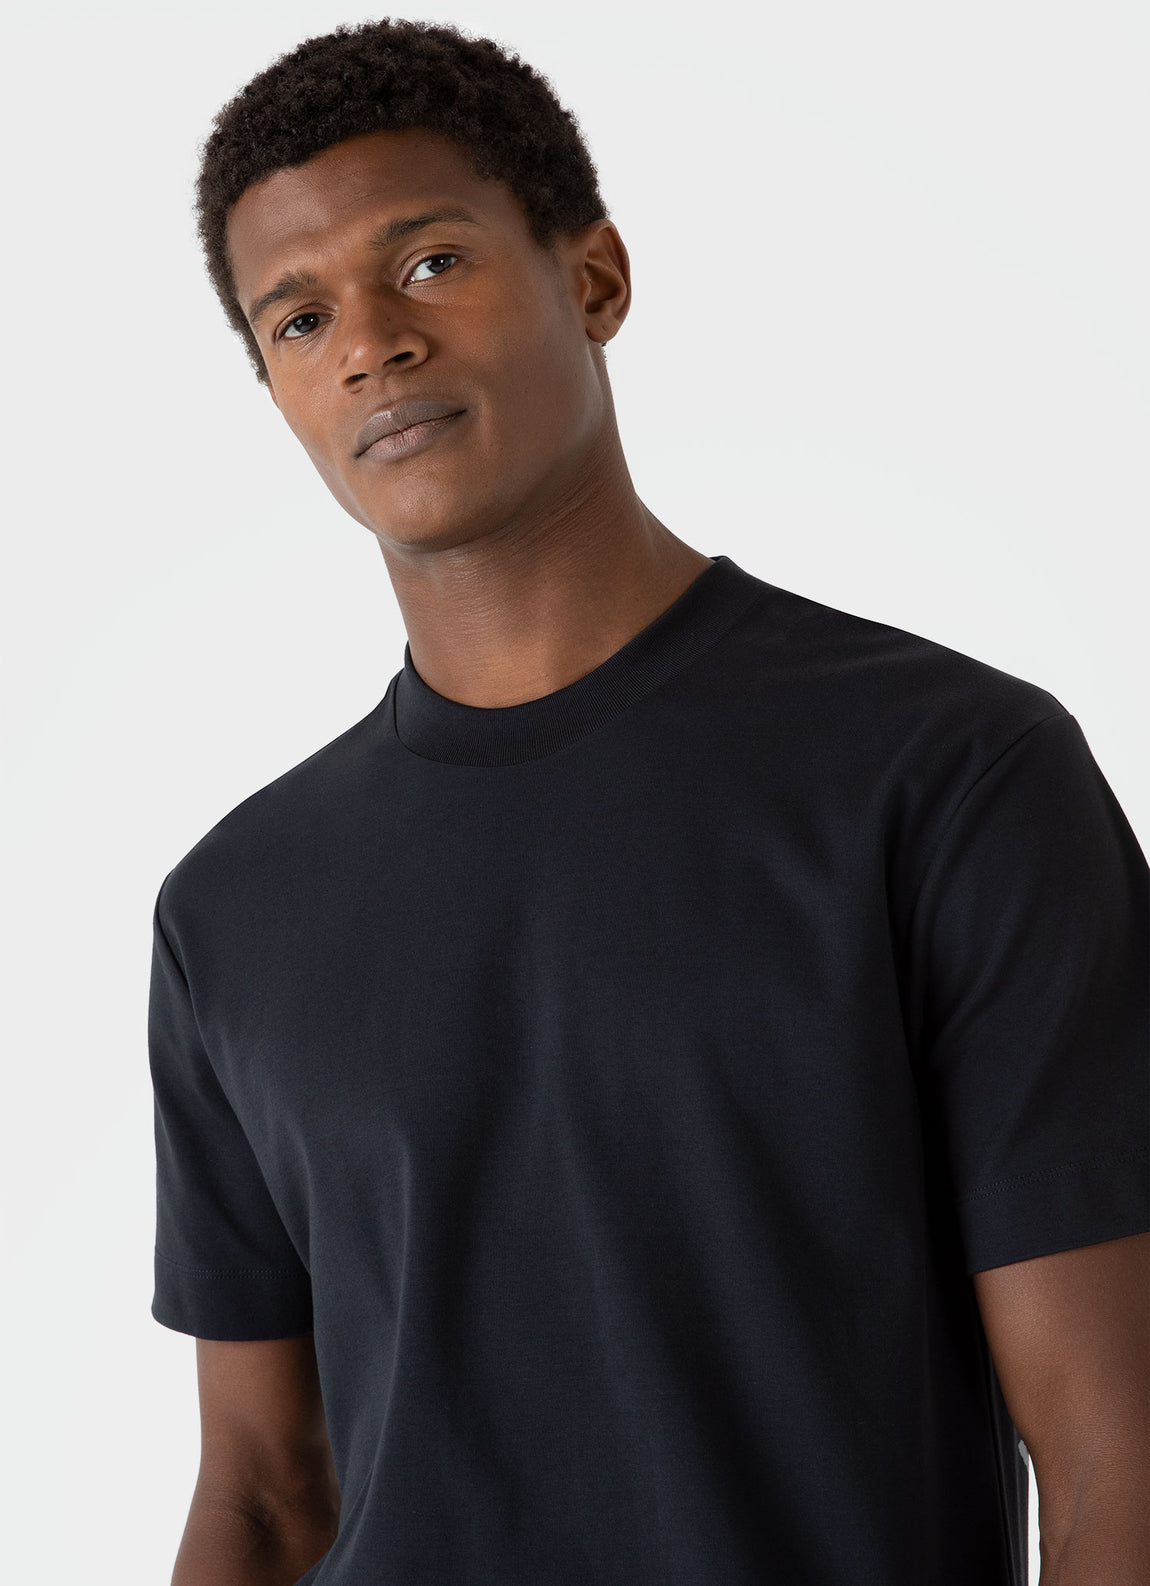 Men's Relaxed Fit Heavyweight T-shirt in Black | Sunspel